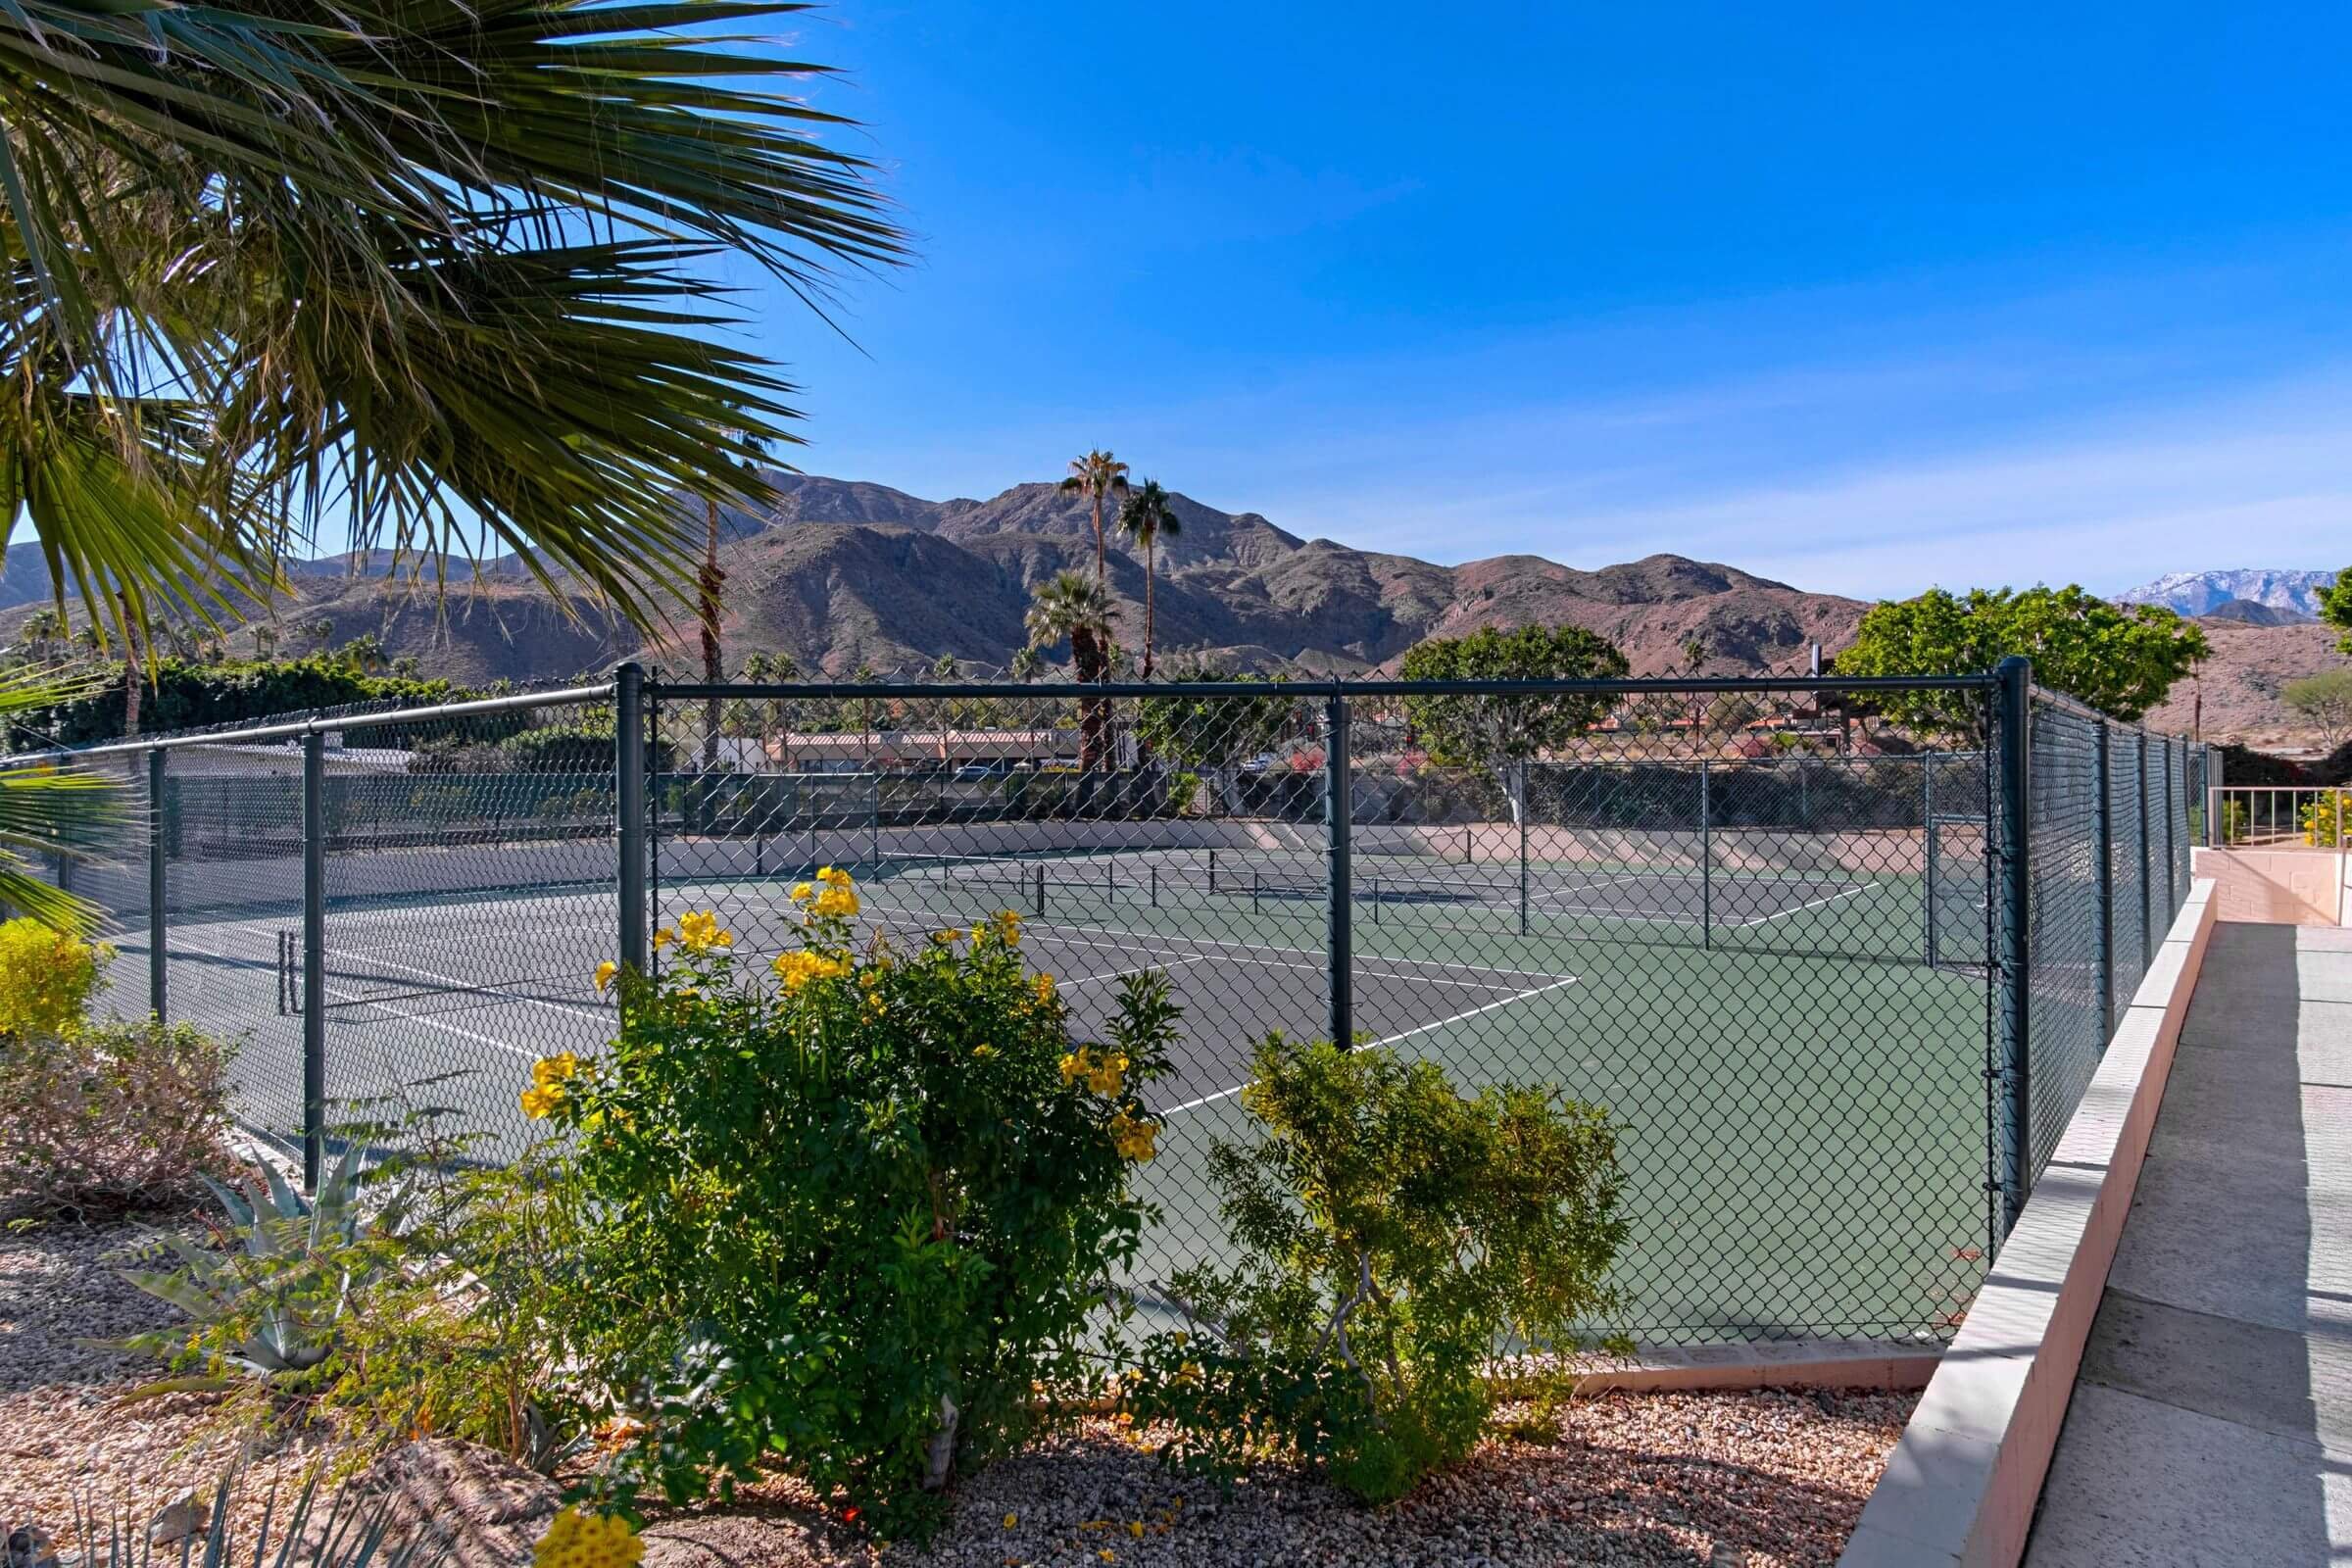 Small Mountain Tennis Courts